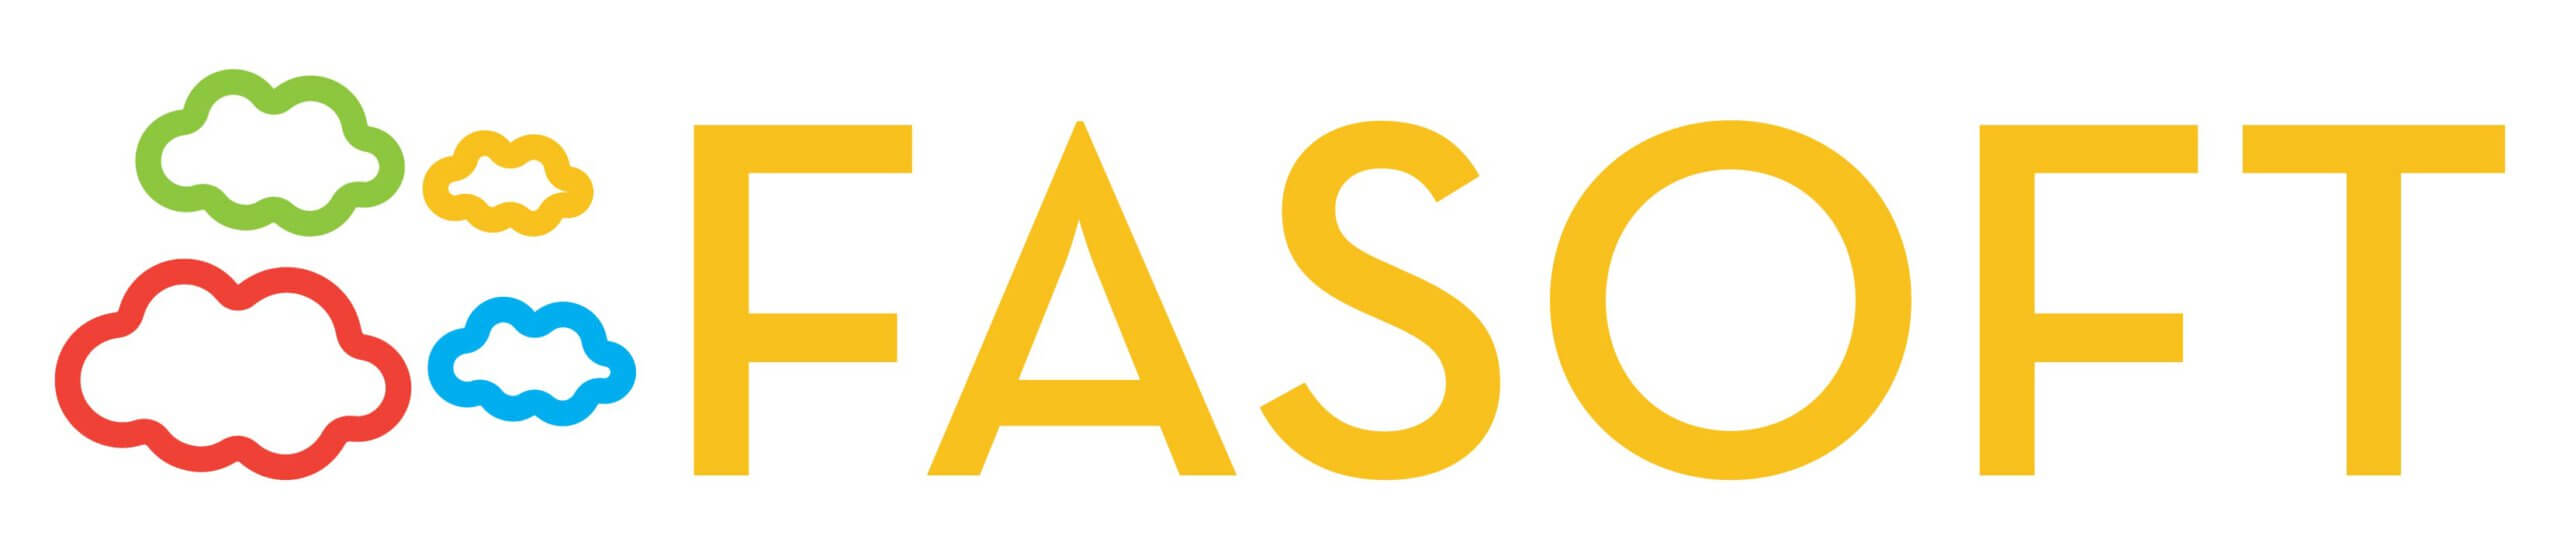 Fasoft AI Research and Technology Company